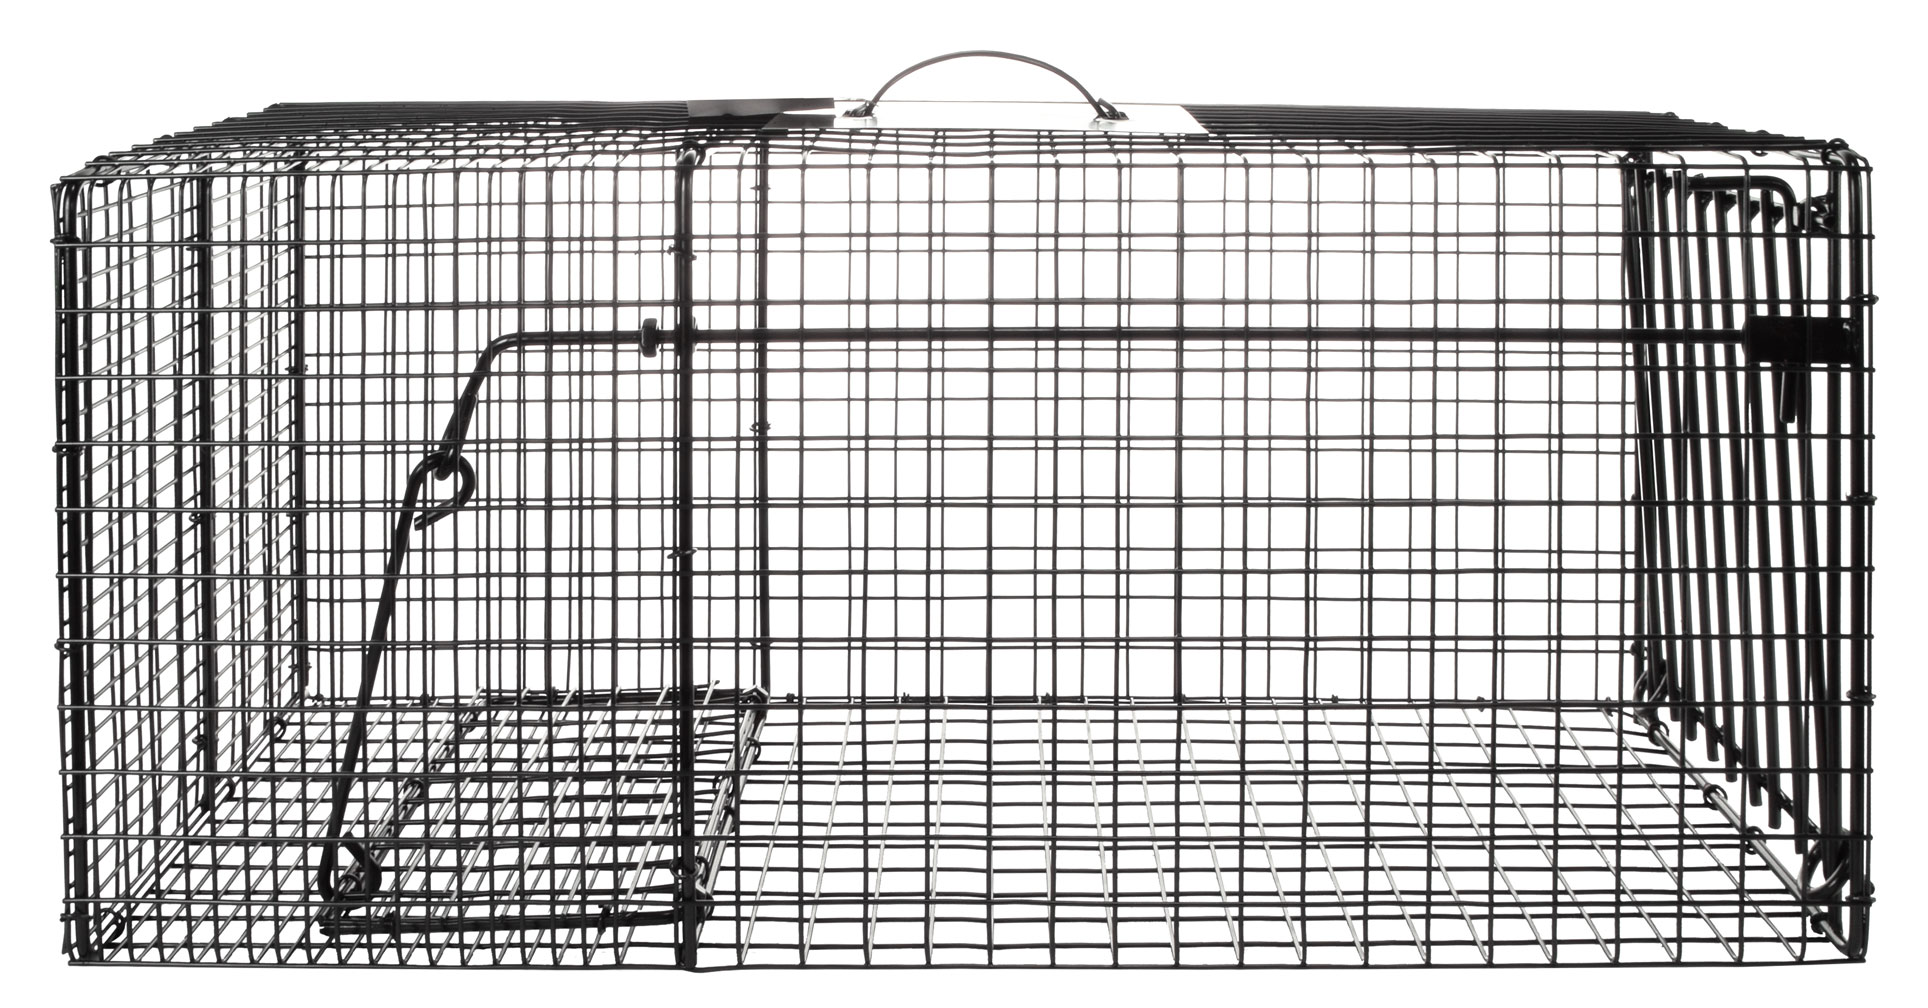 Raccoon Cage Trap